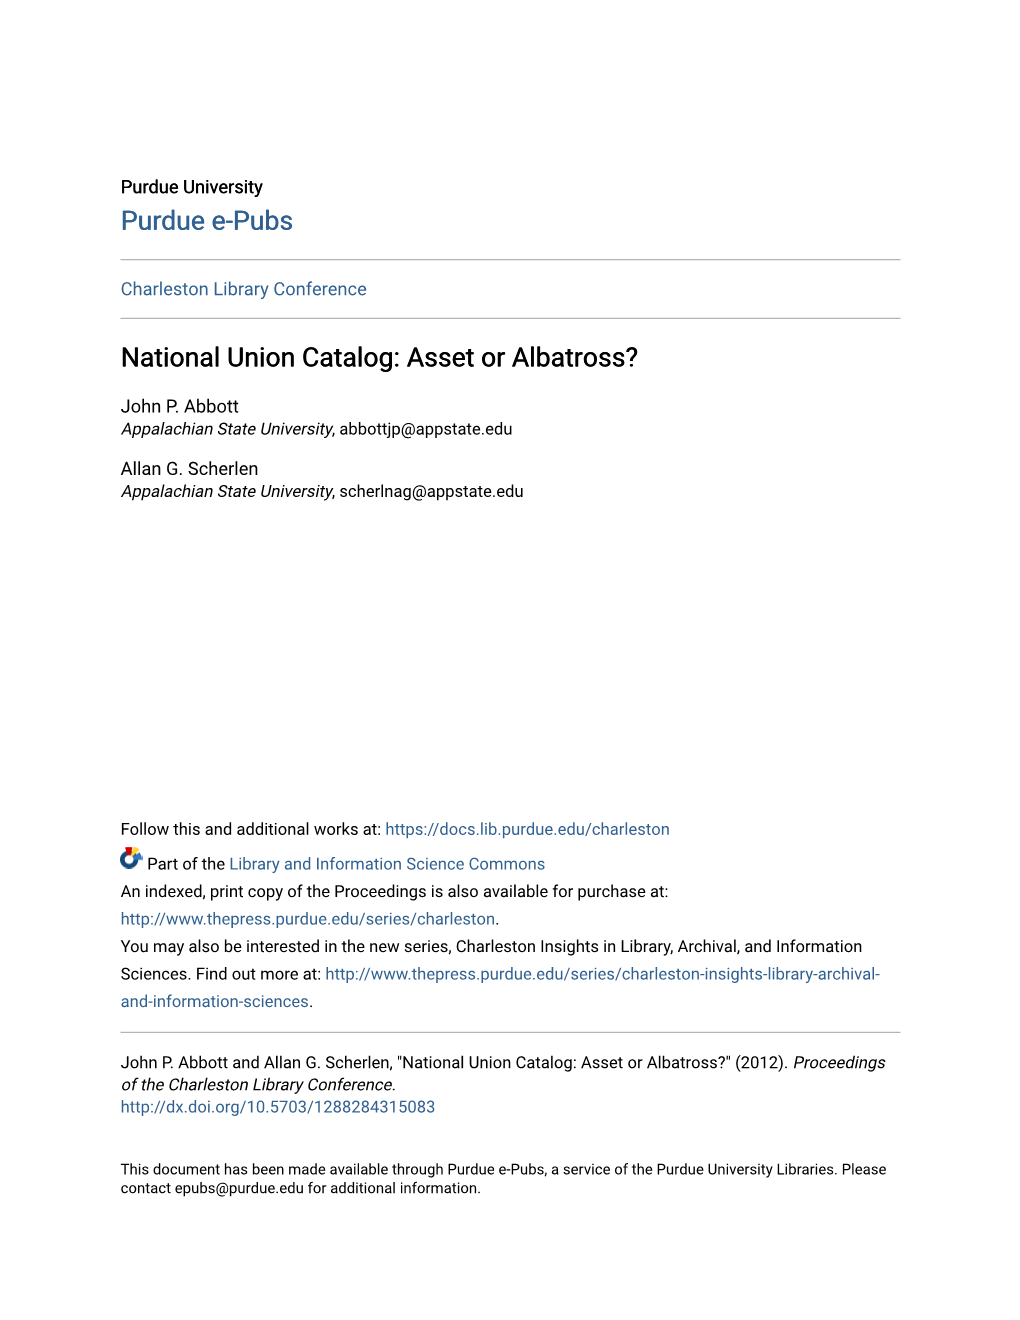 National Union Catalog: Asset Or Albatross?